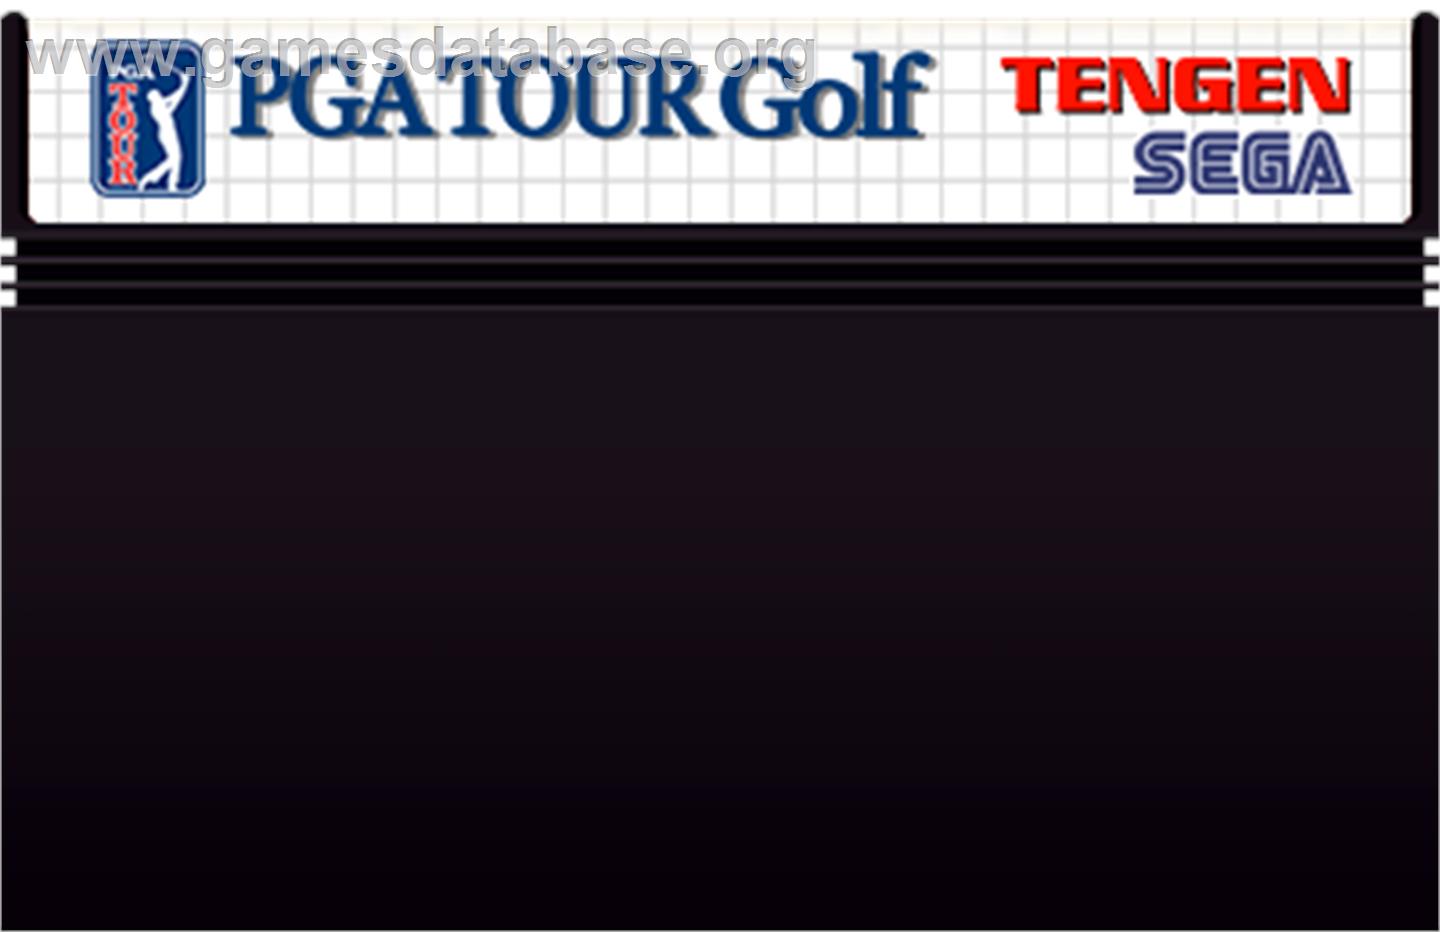 PGA Tour Golf - Sega Master System - Artwork - Cartridge